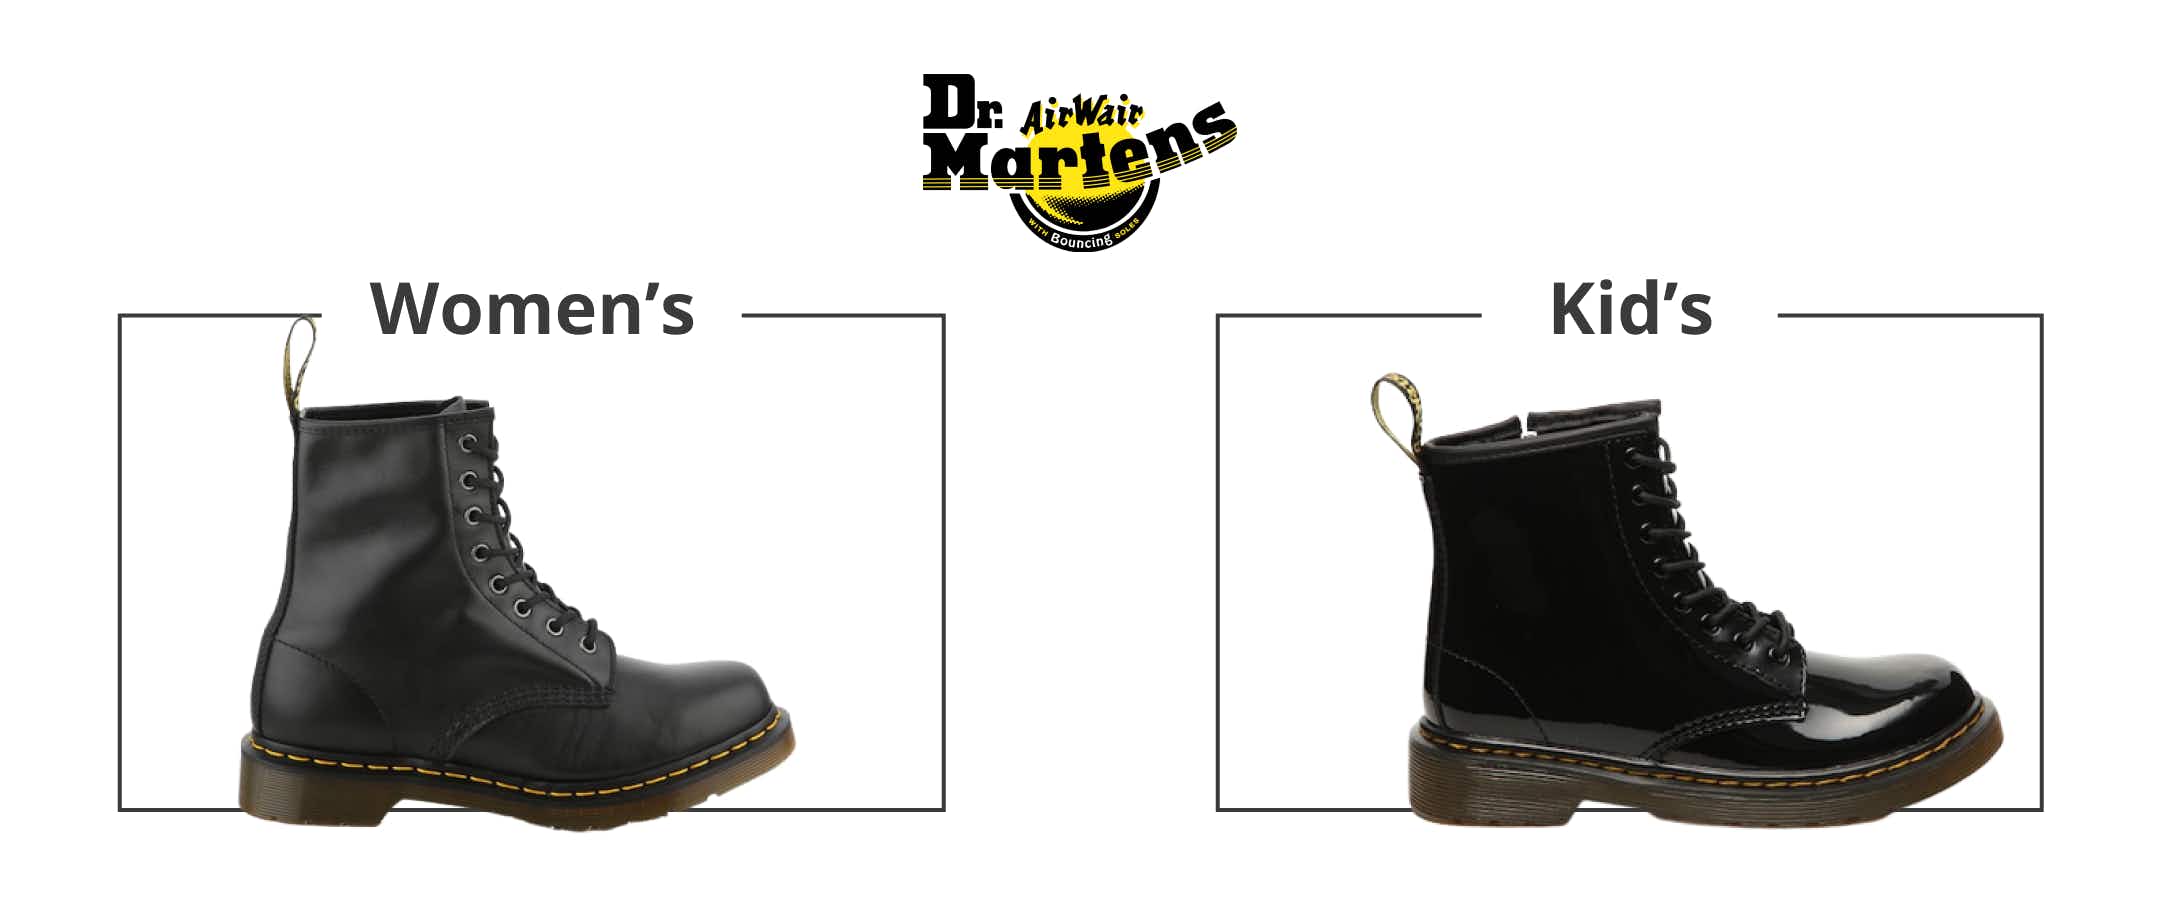 A comparison of a kid's and women's Dr. Martens shoe